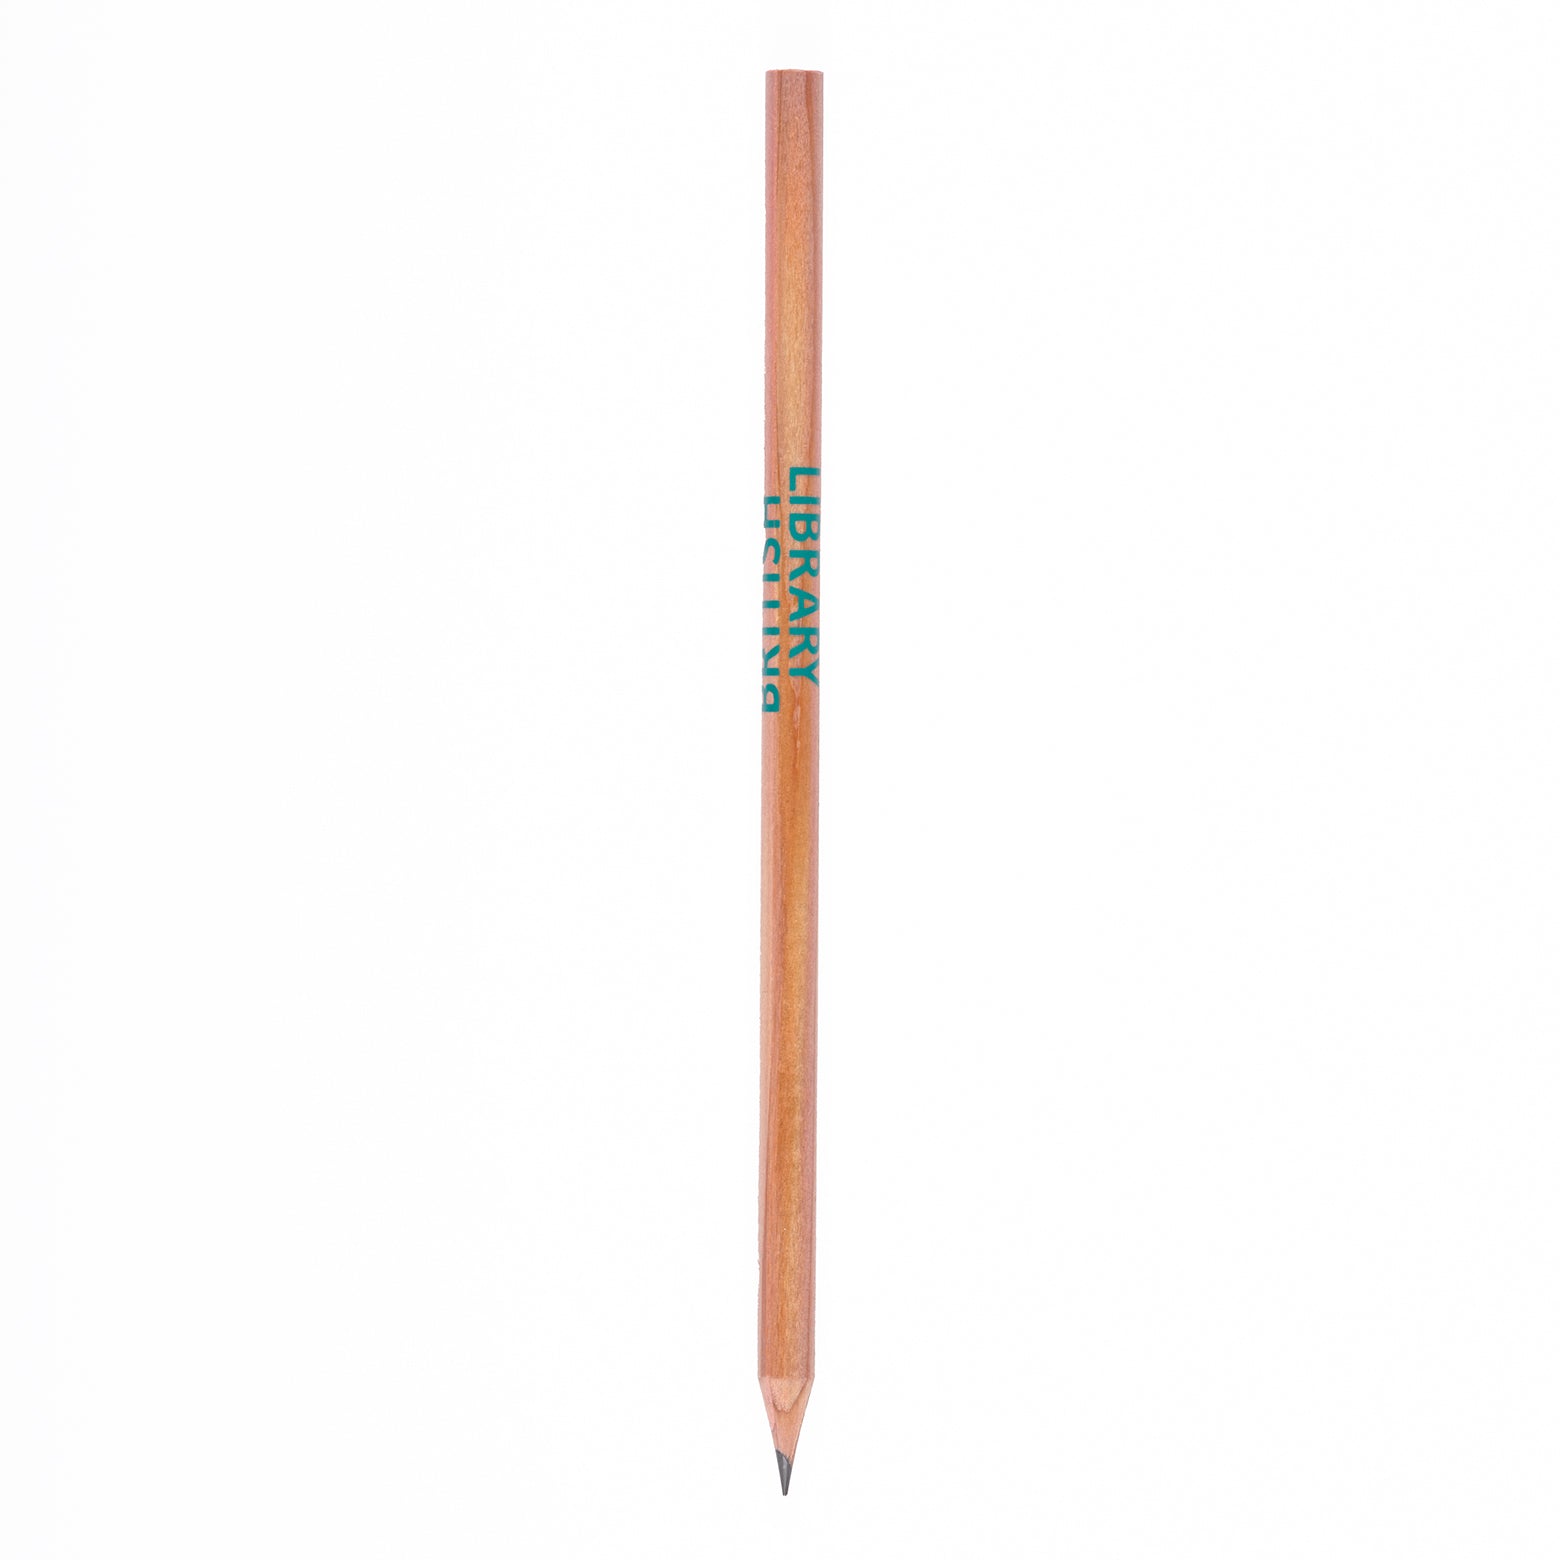 Teal Eco British Library Pencil